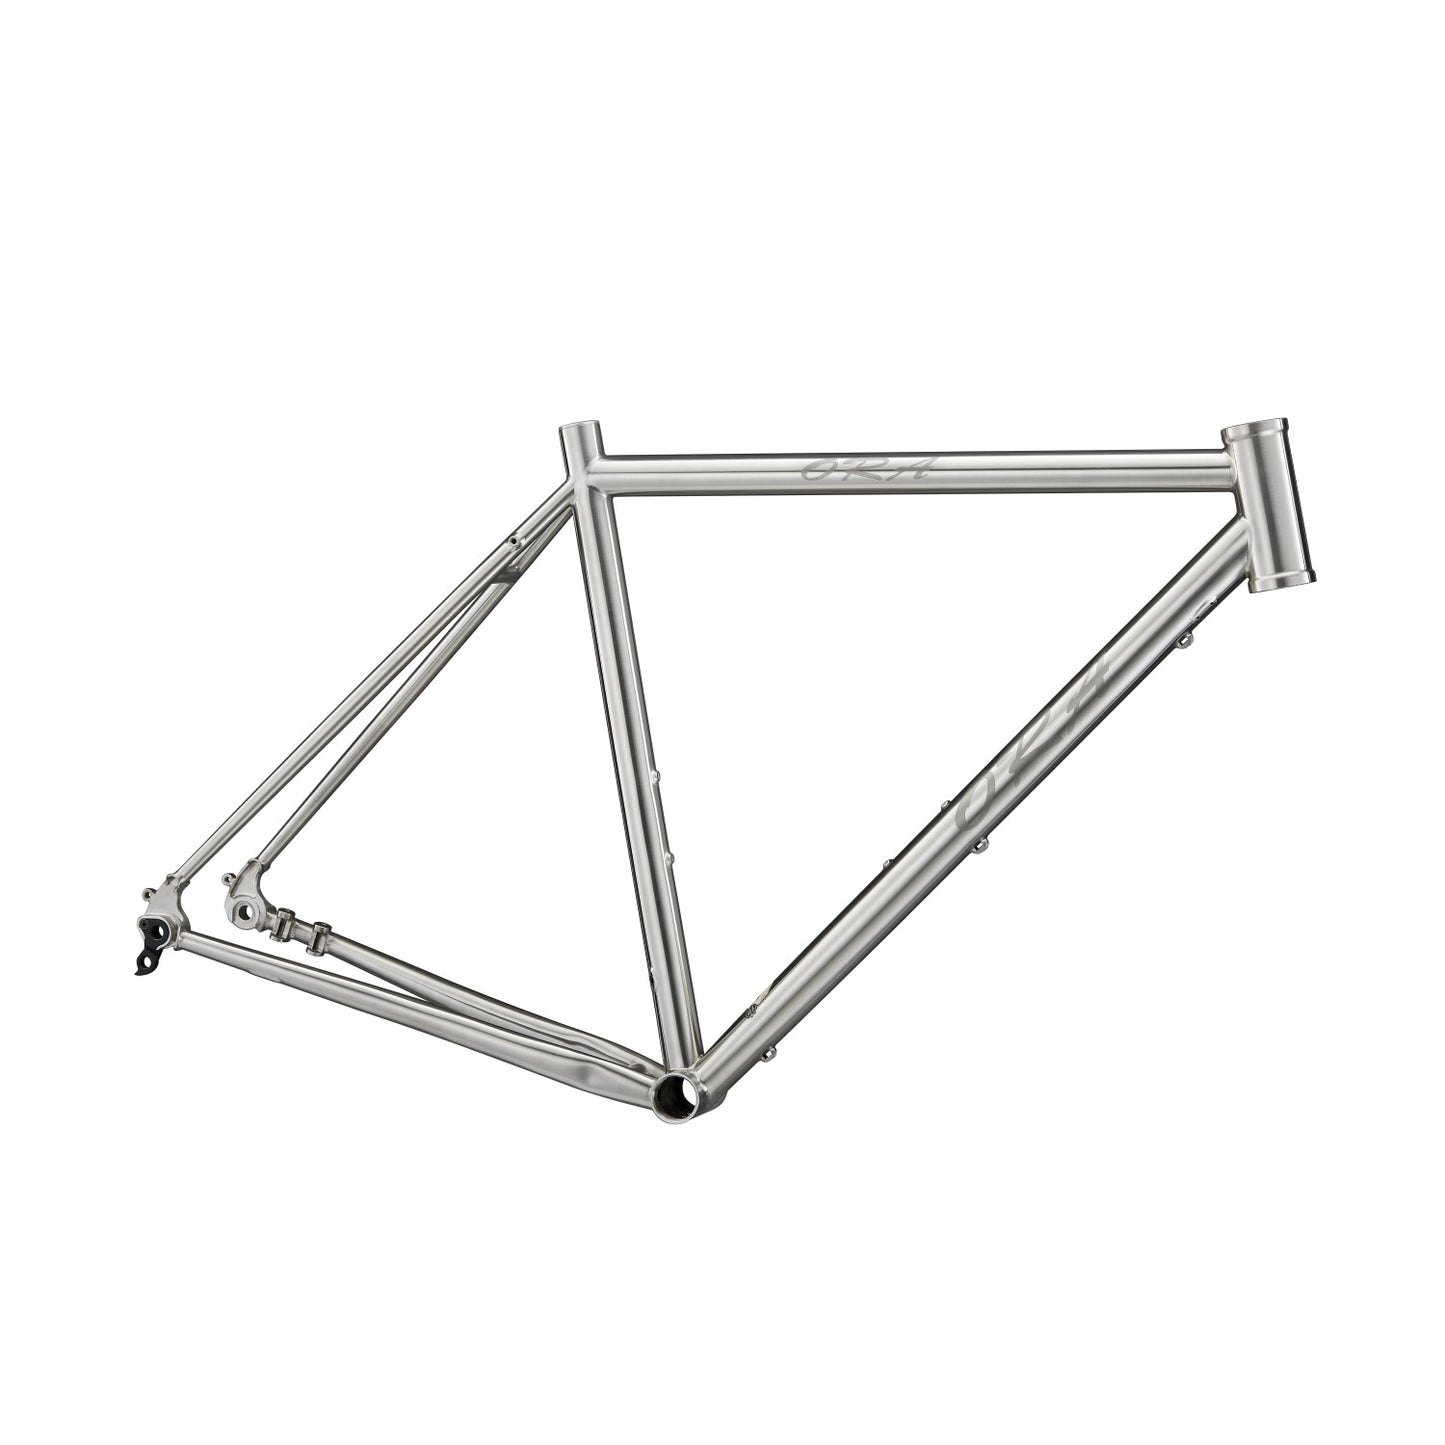 Stainless Steel Cyclo Cross Bike Frame 23-S2C-302